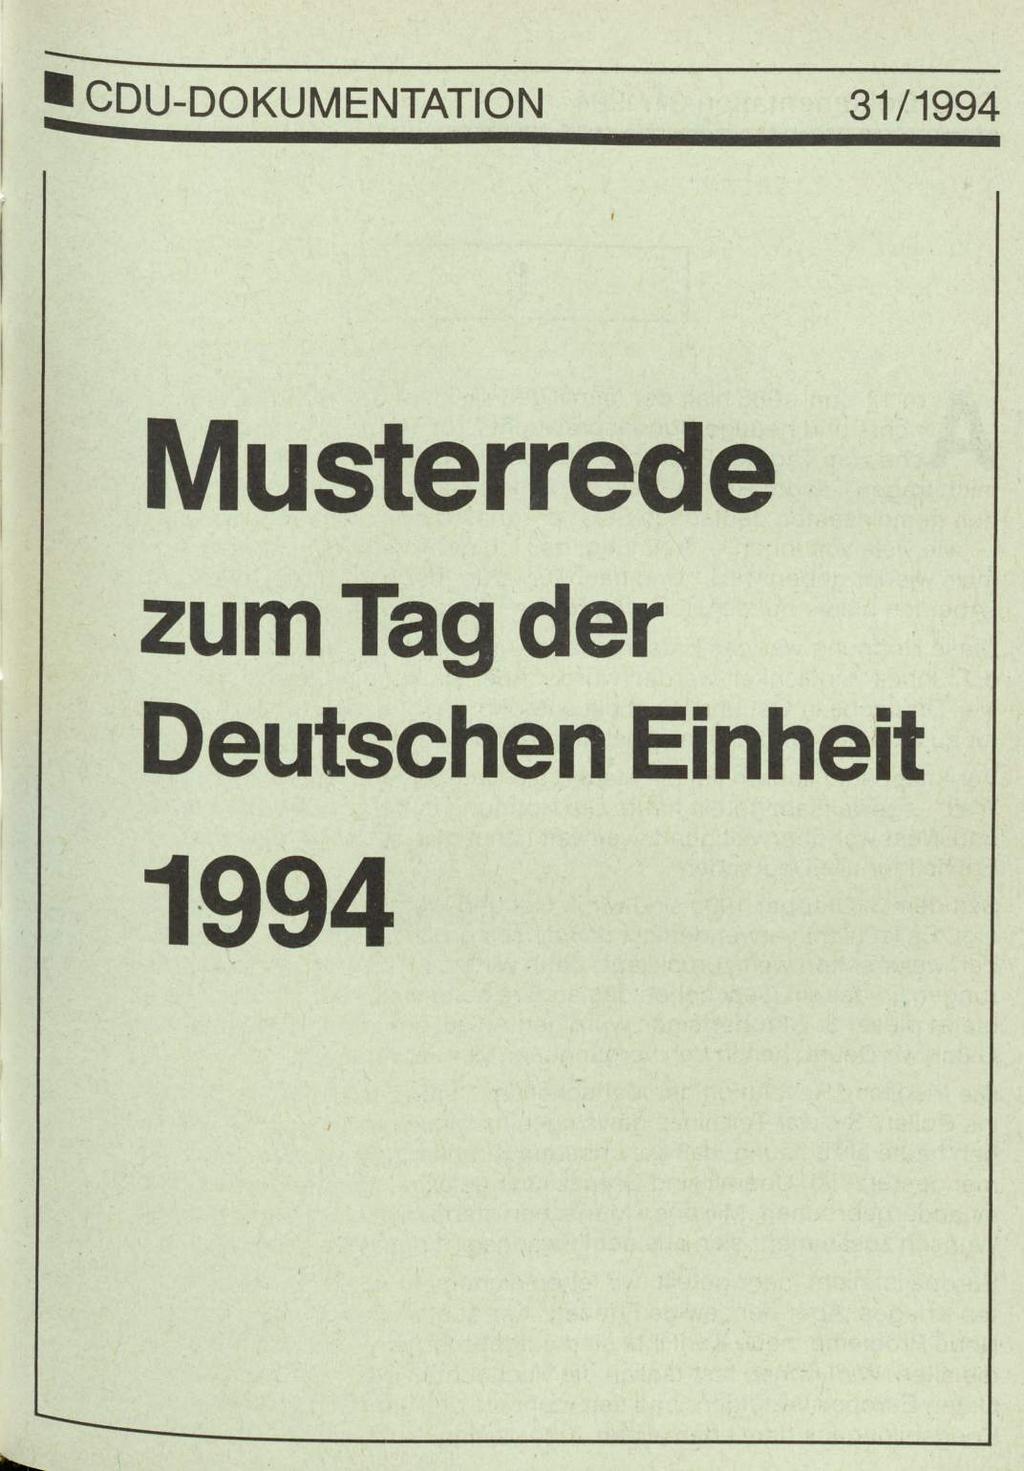 CDU-DOKUMENTATION 31/1994